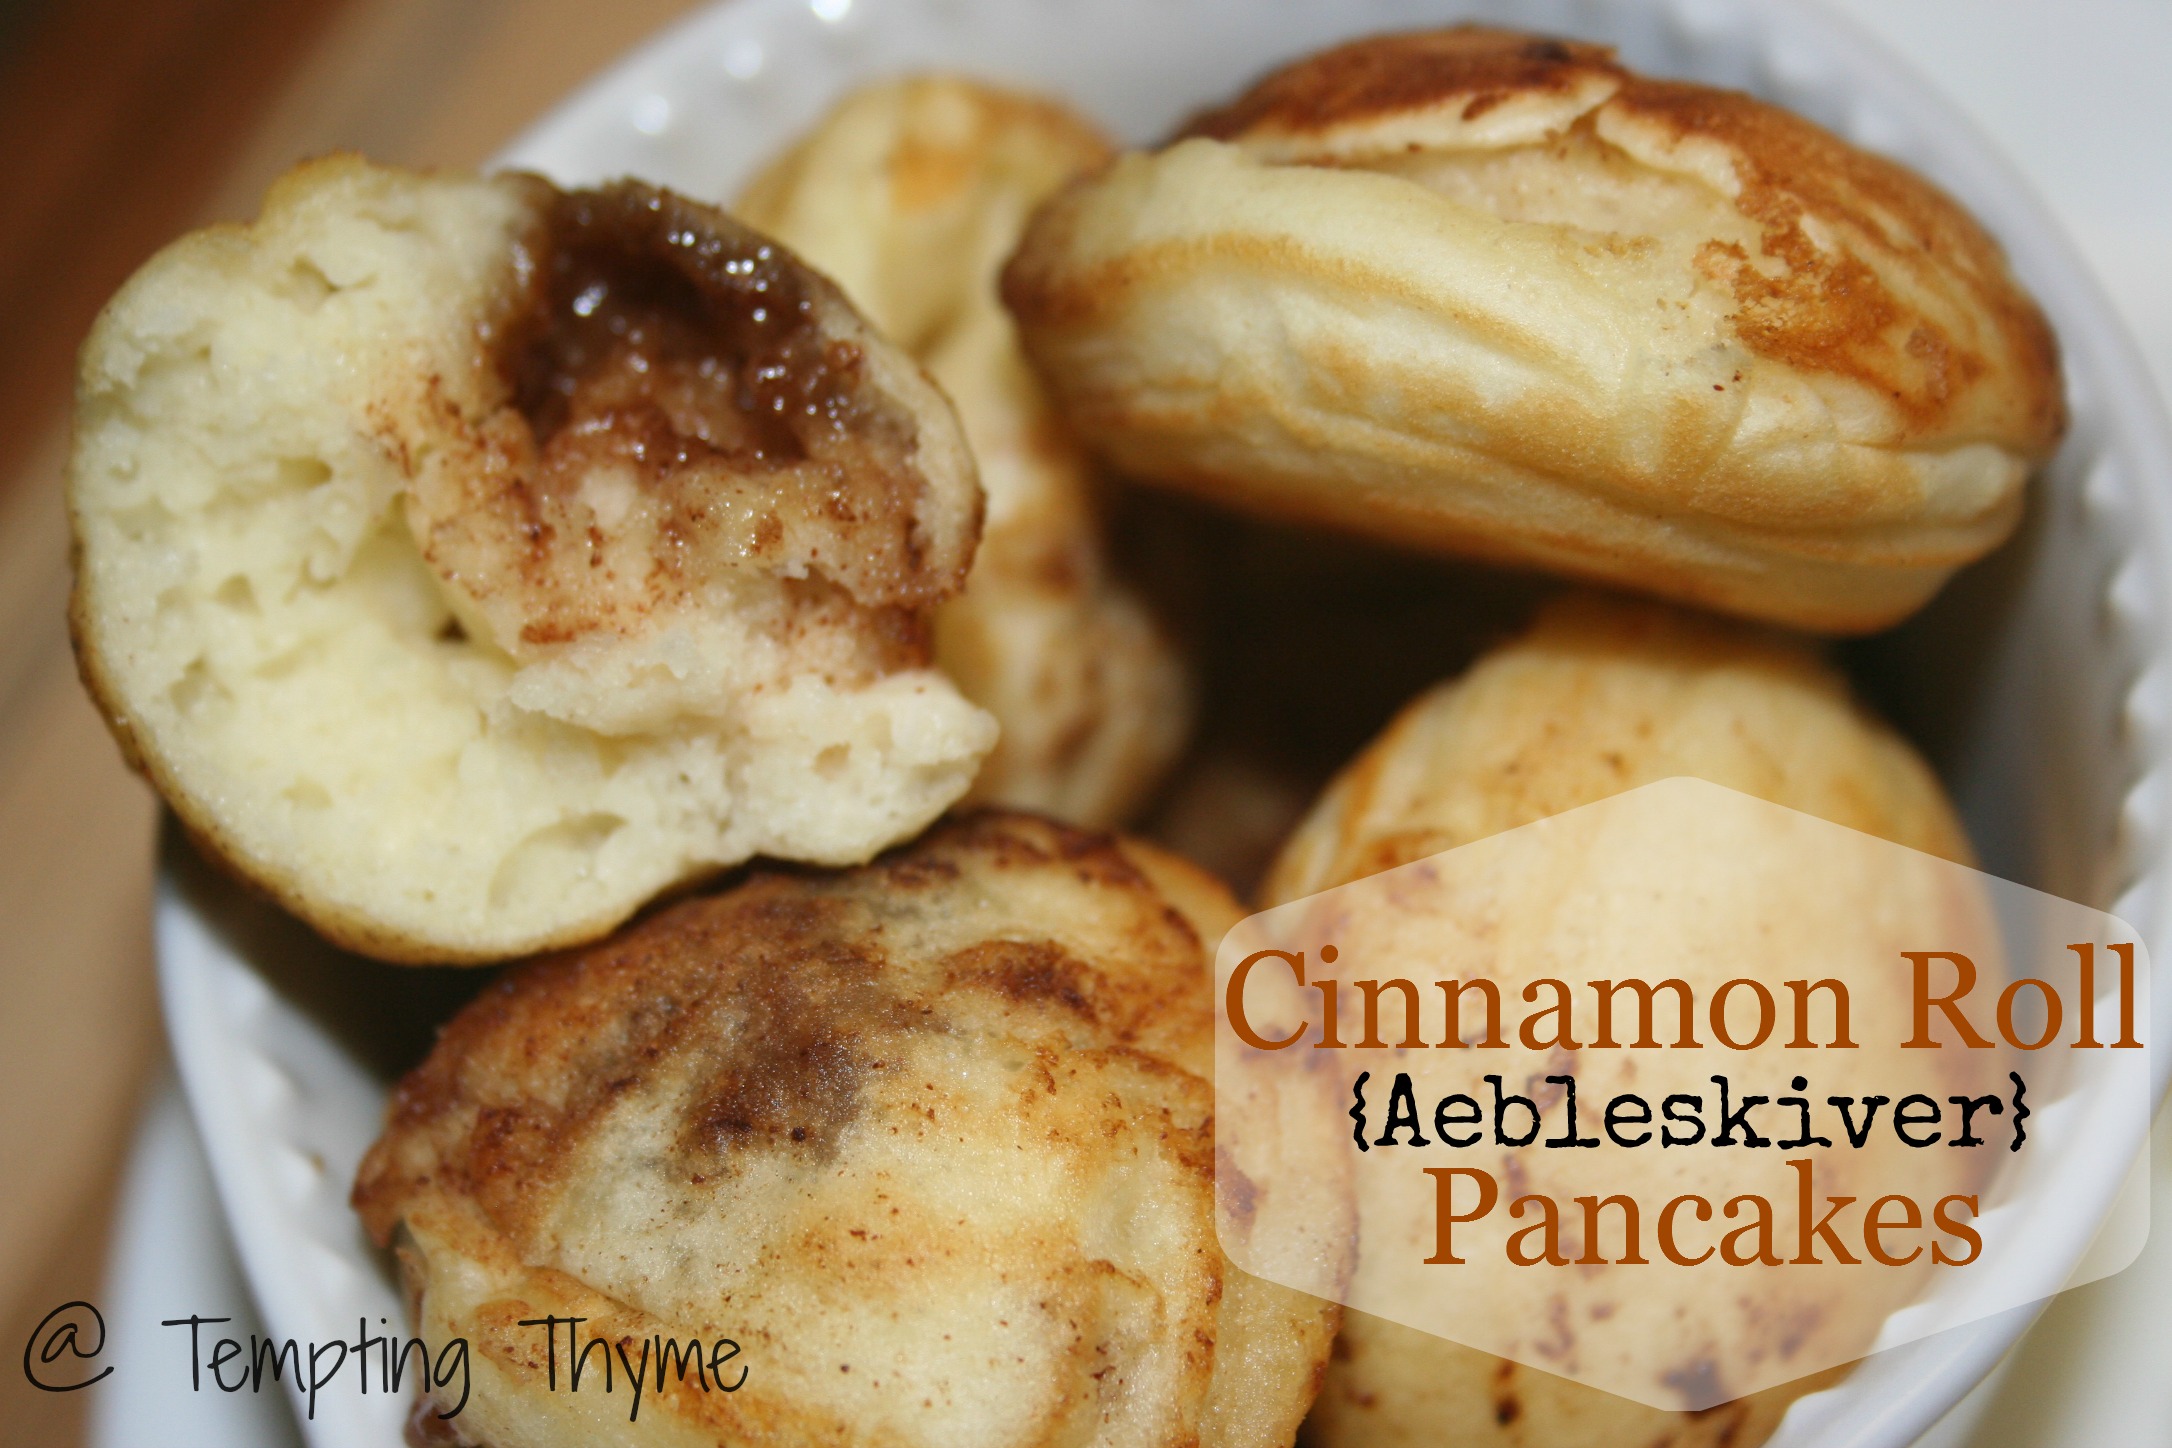 https://temptingthyme.com/wp-content/uploads/2013/01/cinnamon-roll-aebleskiver-pancakes.jpg